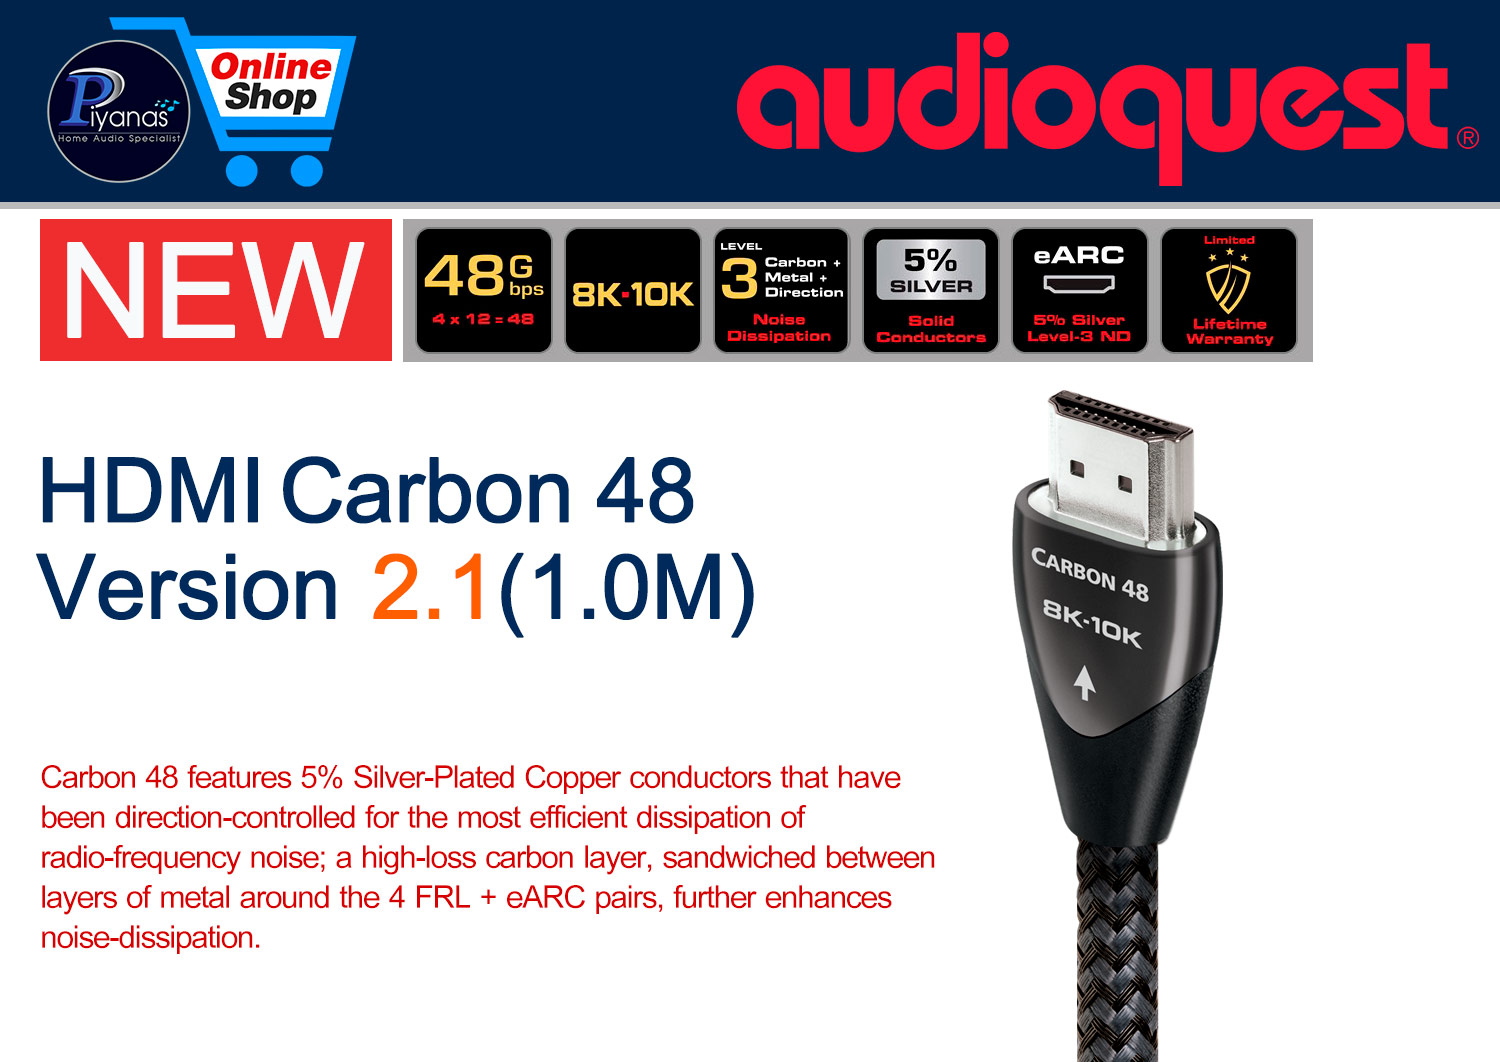 HDMI-Carbon 48 Version 2.1